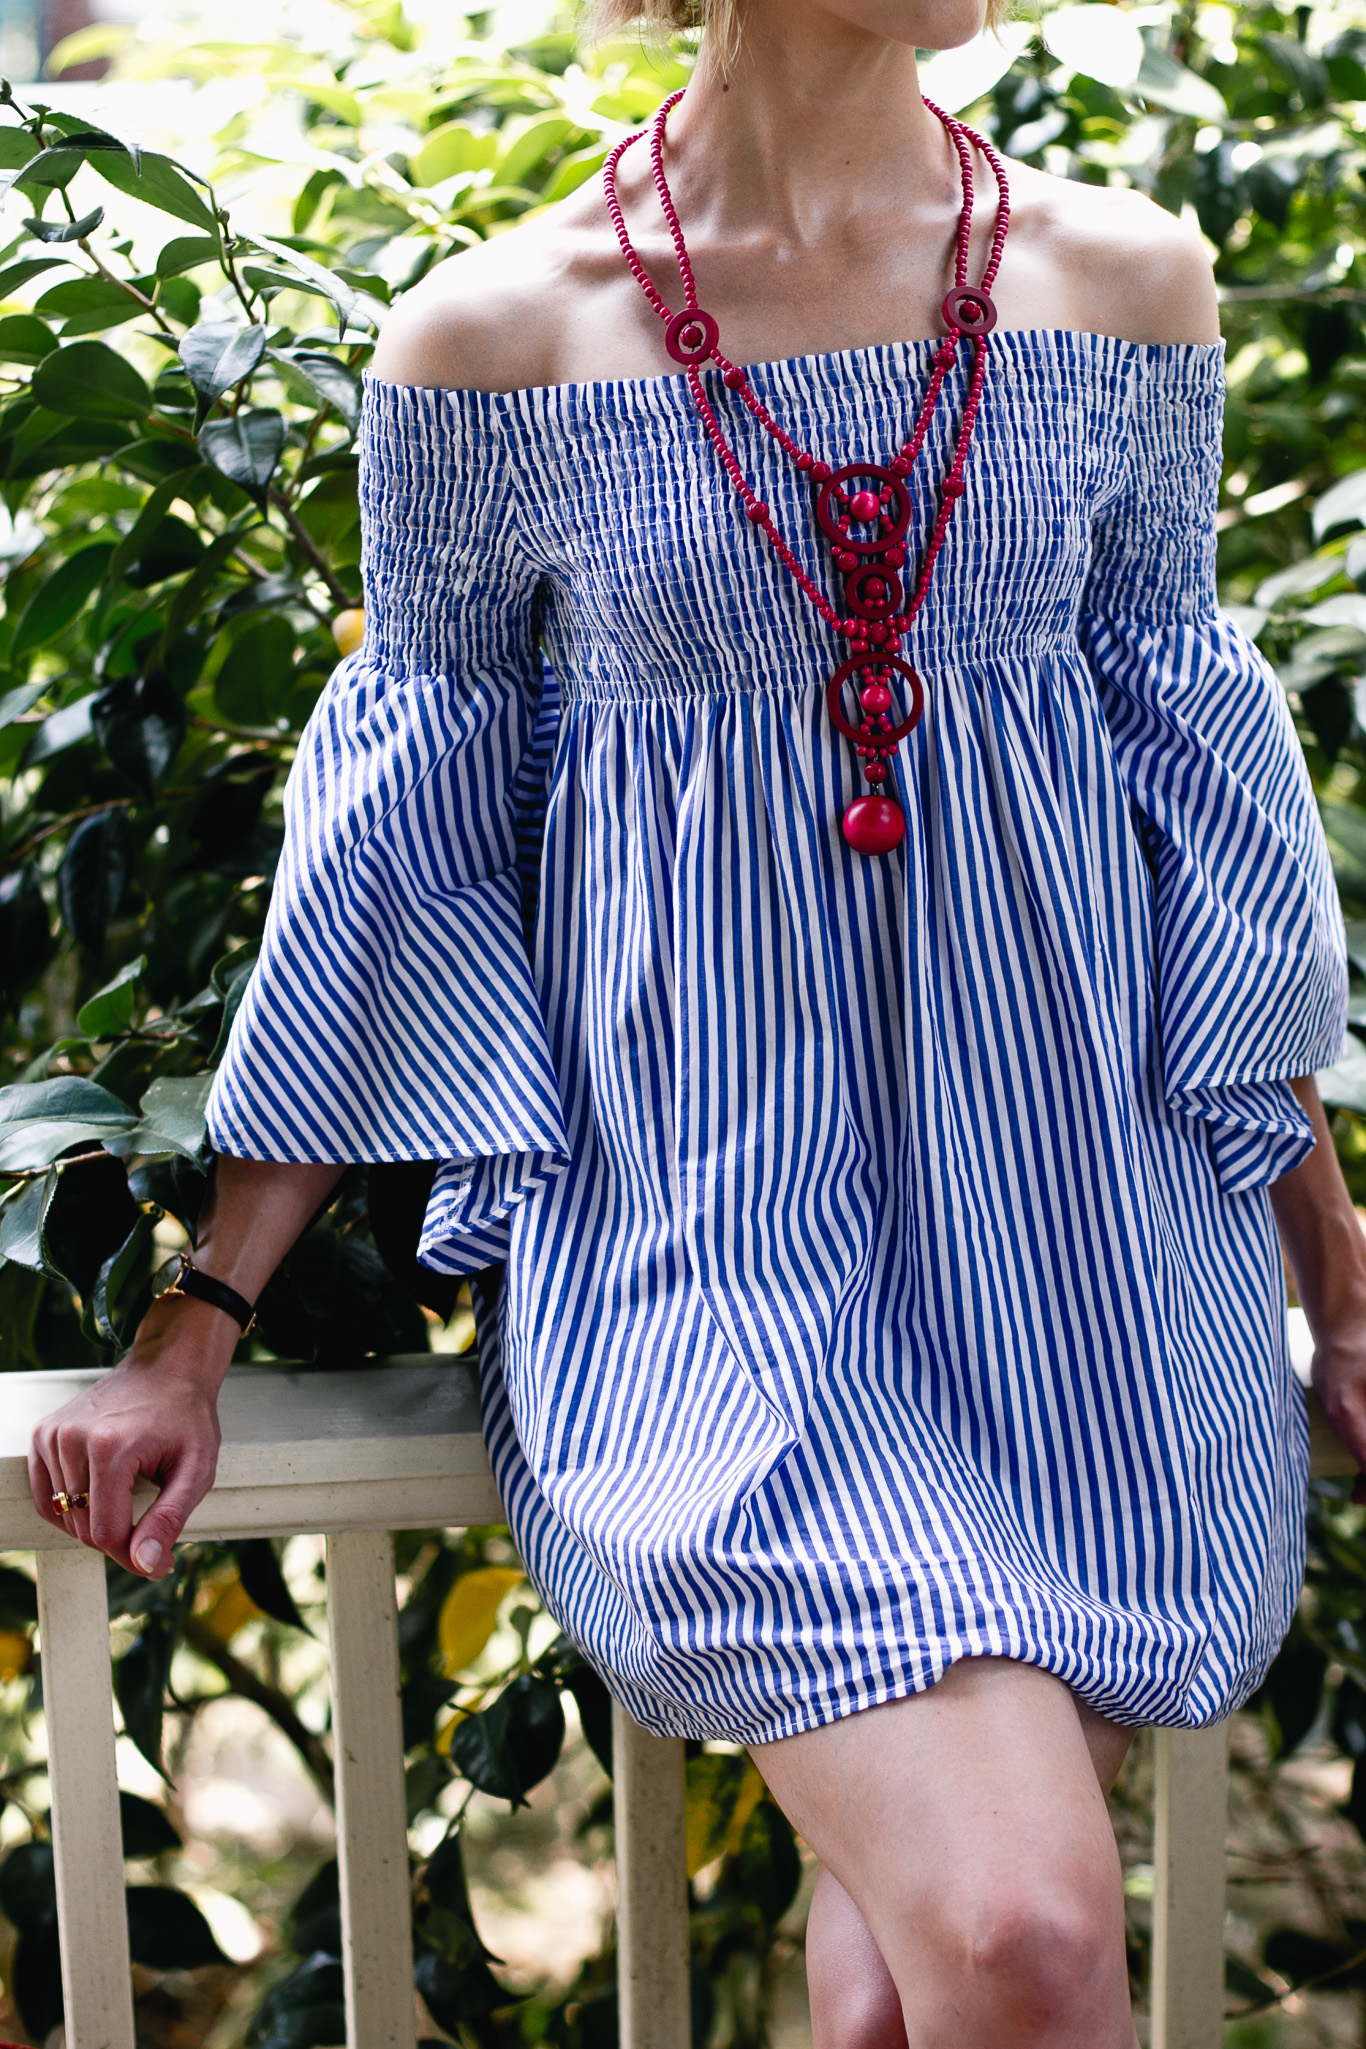 Zara pinstripe dress and vintage necklace